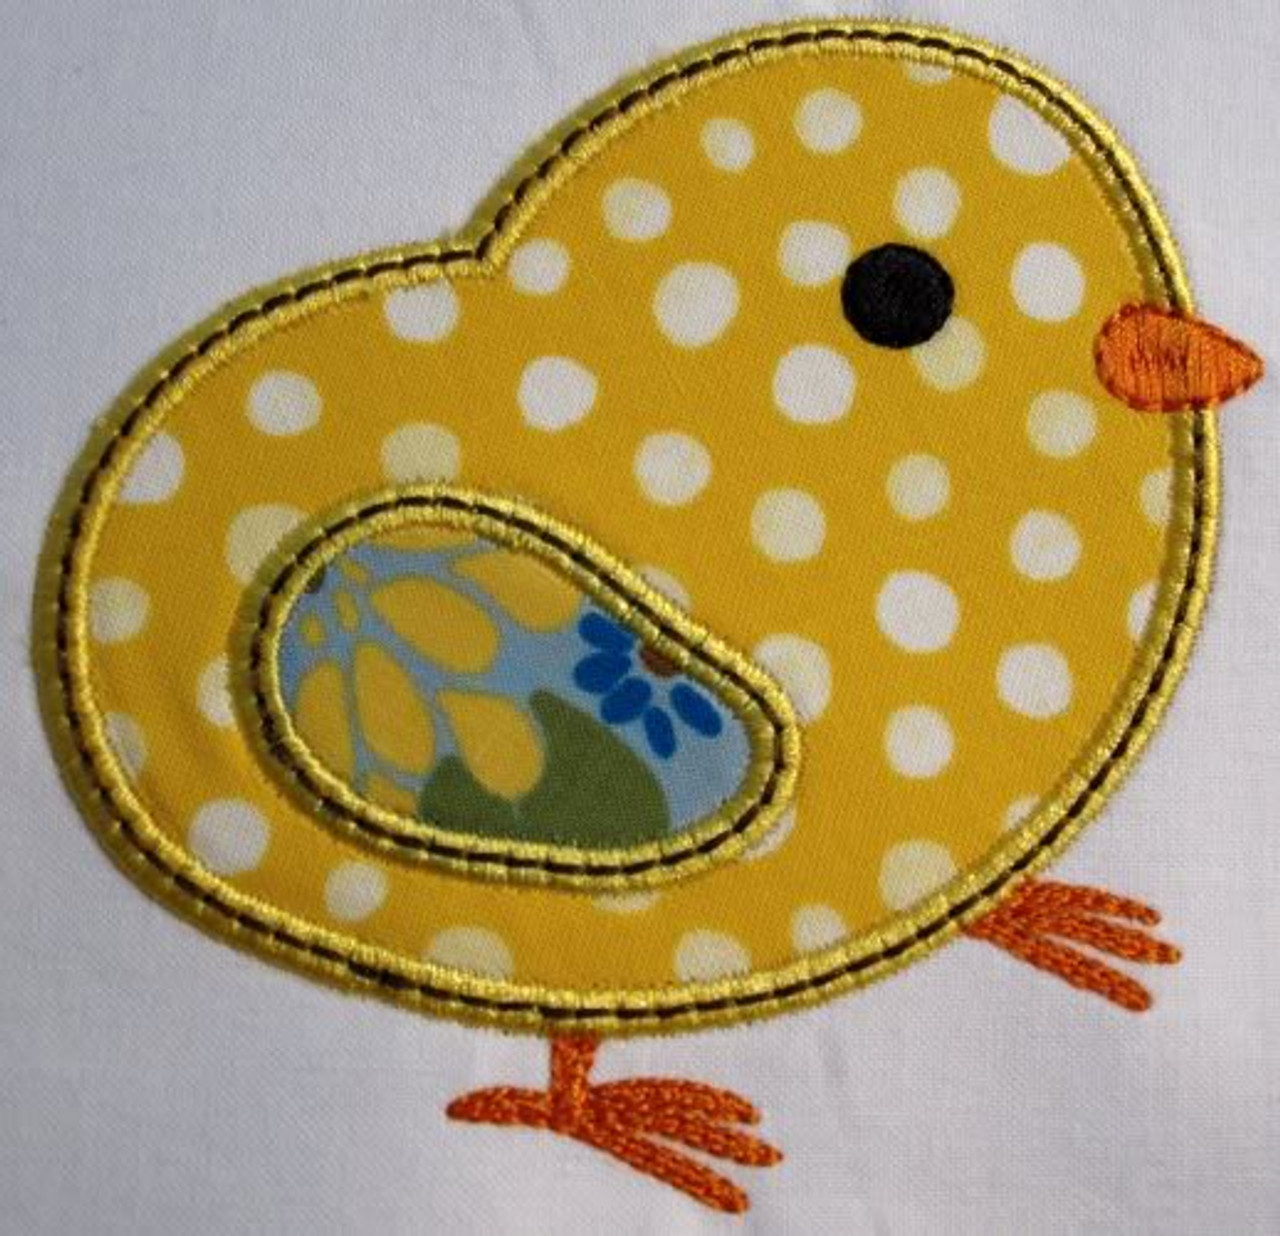 Applique Chicks Machine Embroidery Designs